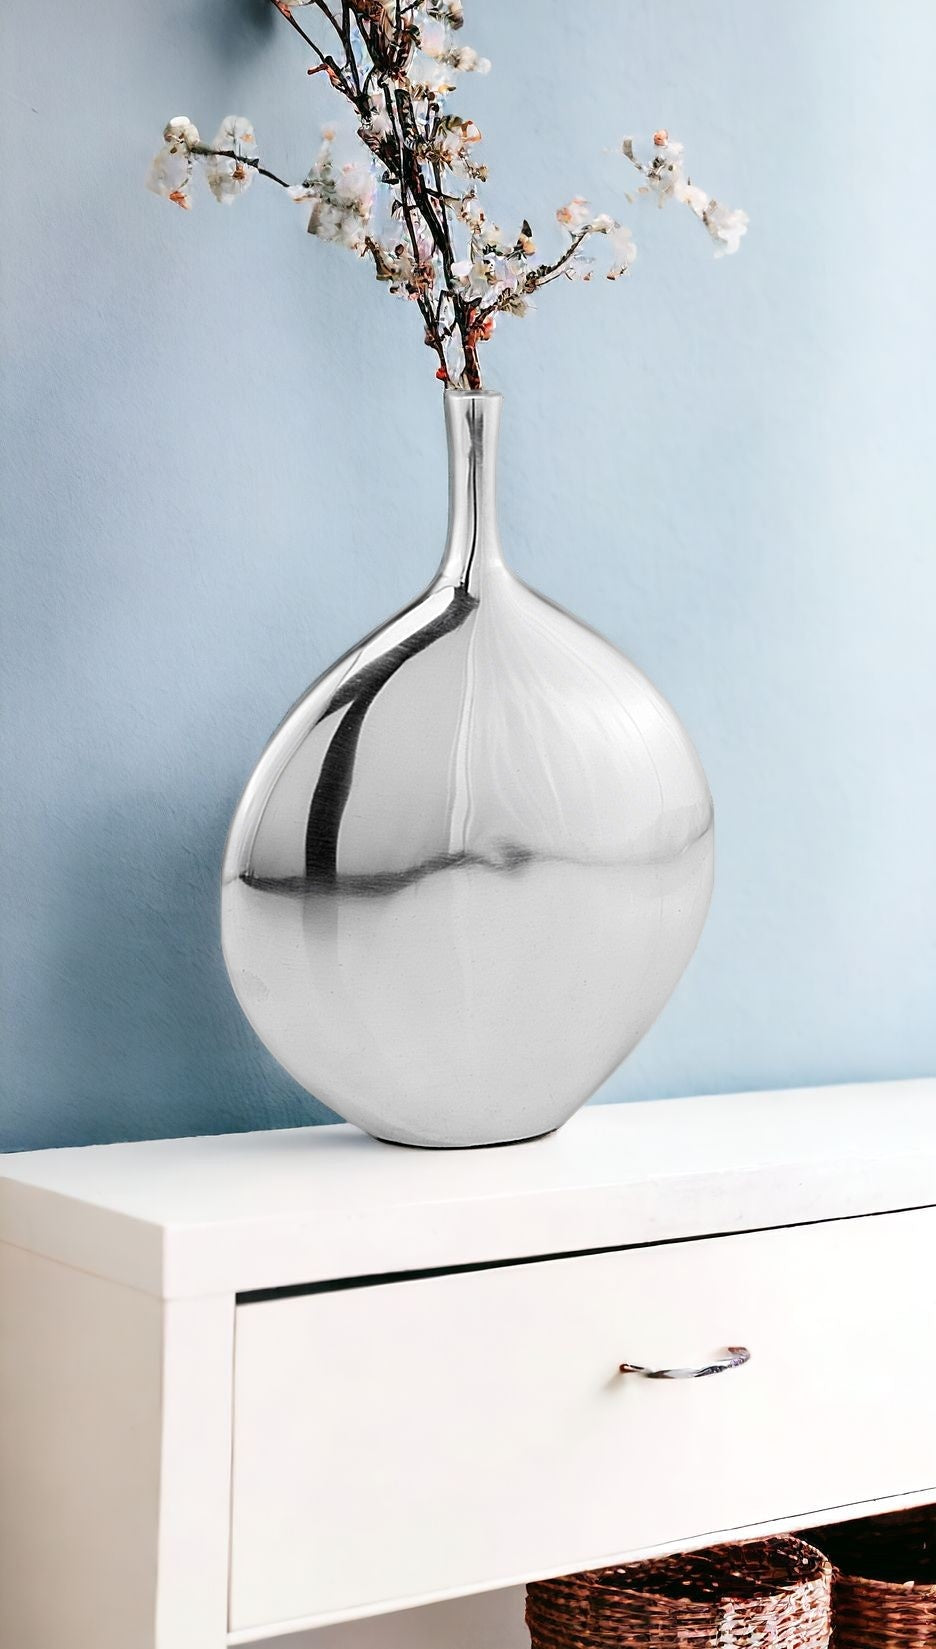 3" X 9" X 12" Silver Aluminum Meduim Long Neck Disc Vase